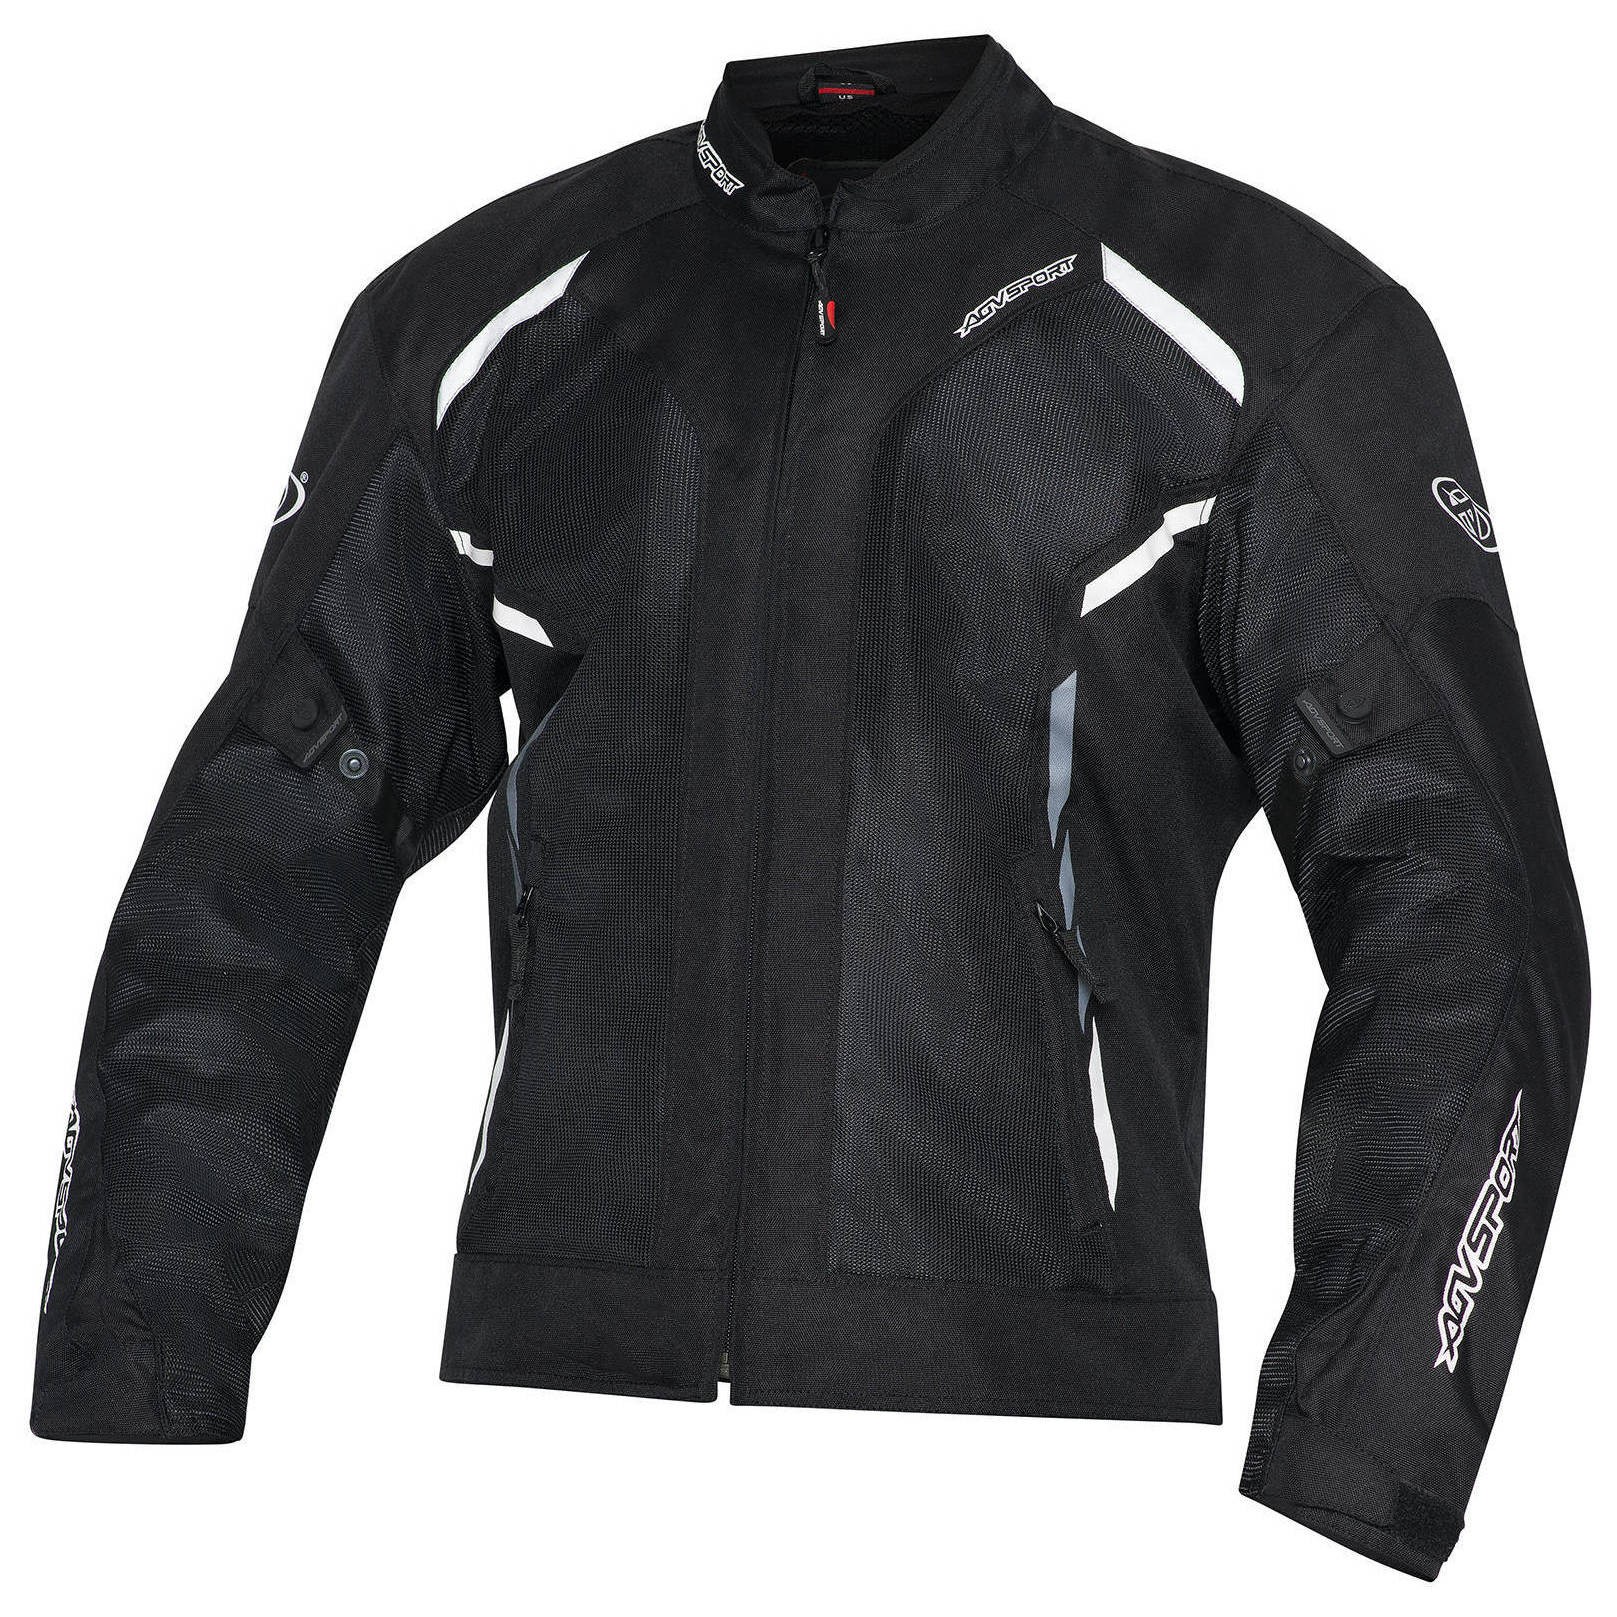 AGV Sport CLX Jacket - Textile - Motorcycle Jackets - Motorcycle ...